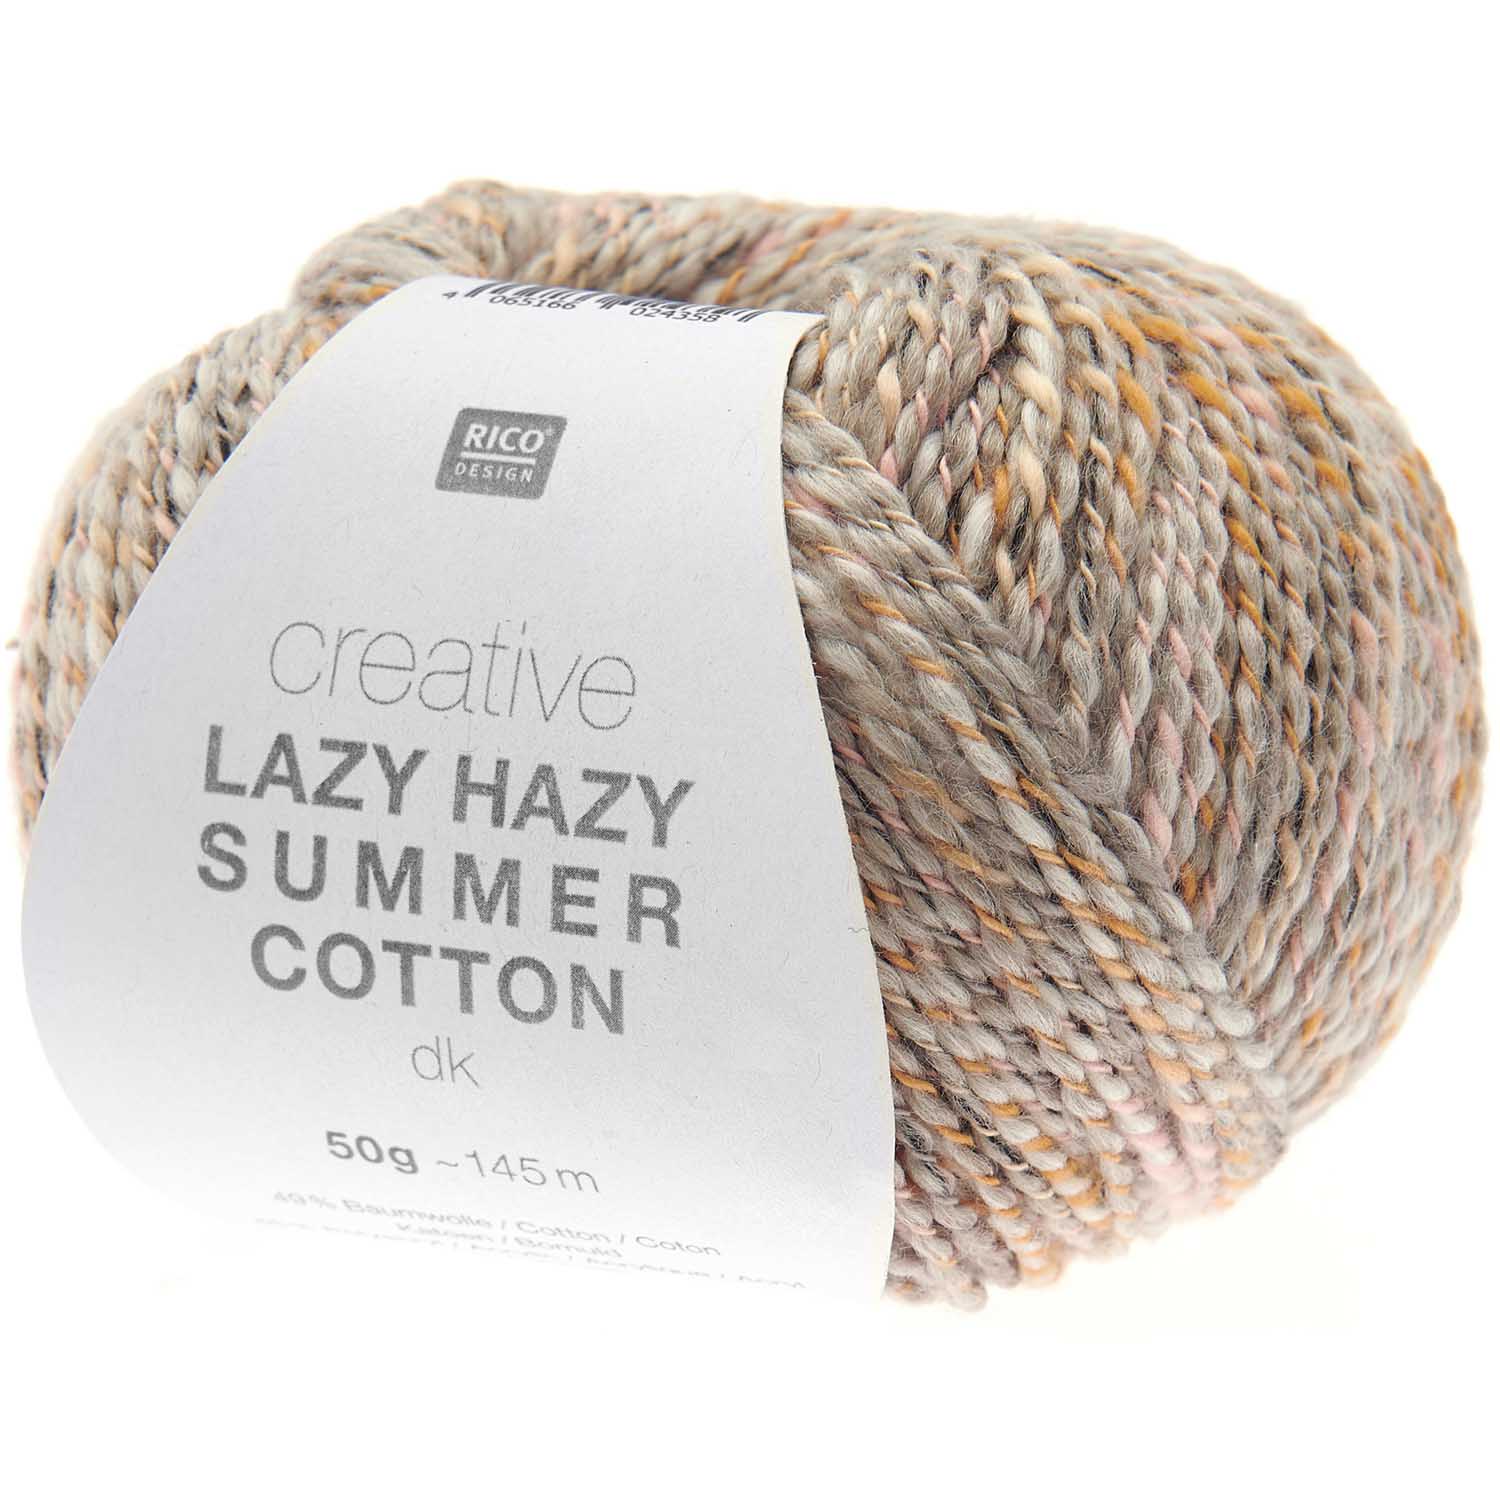 Rico Creative Lazy Hazy Summer Cotton kleur 21